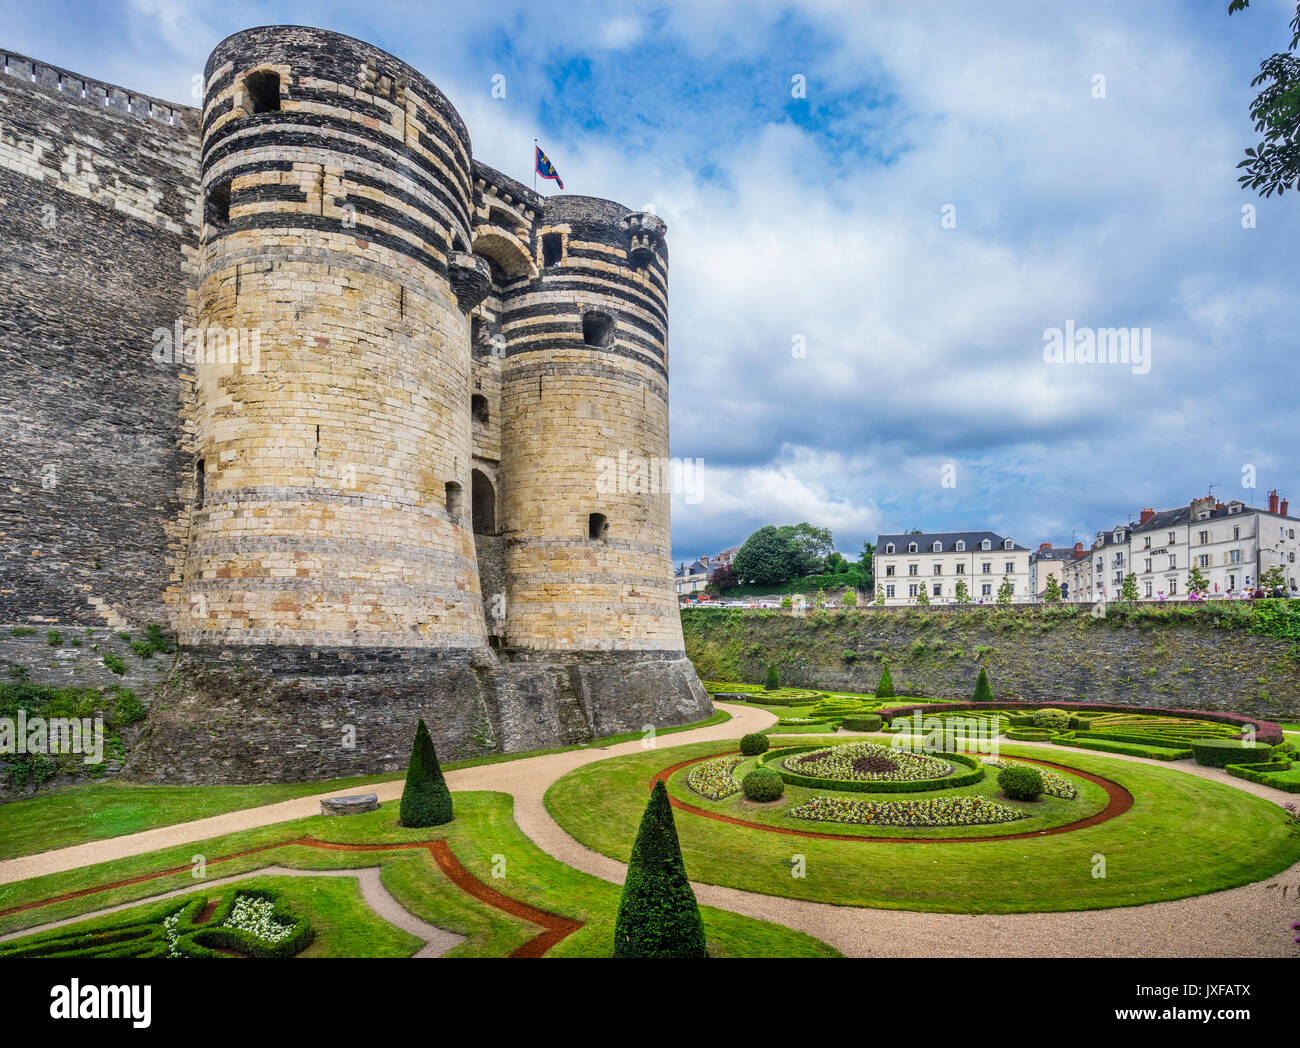 France, Pays de la Loire, Angers, Château d'Angers, ornamented gardens below the south gate battlements of the medieval castle Stock Photo